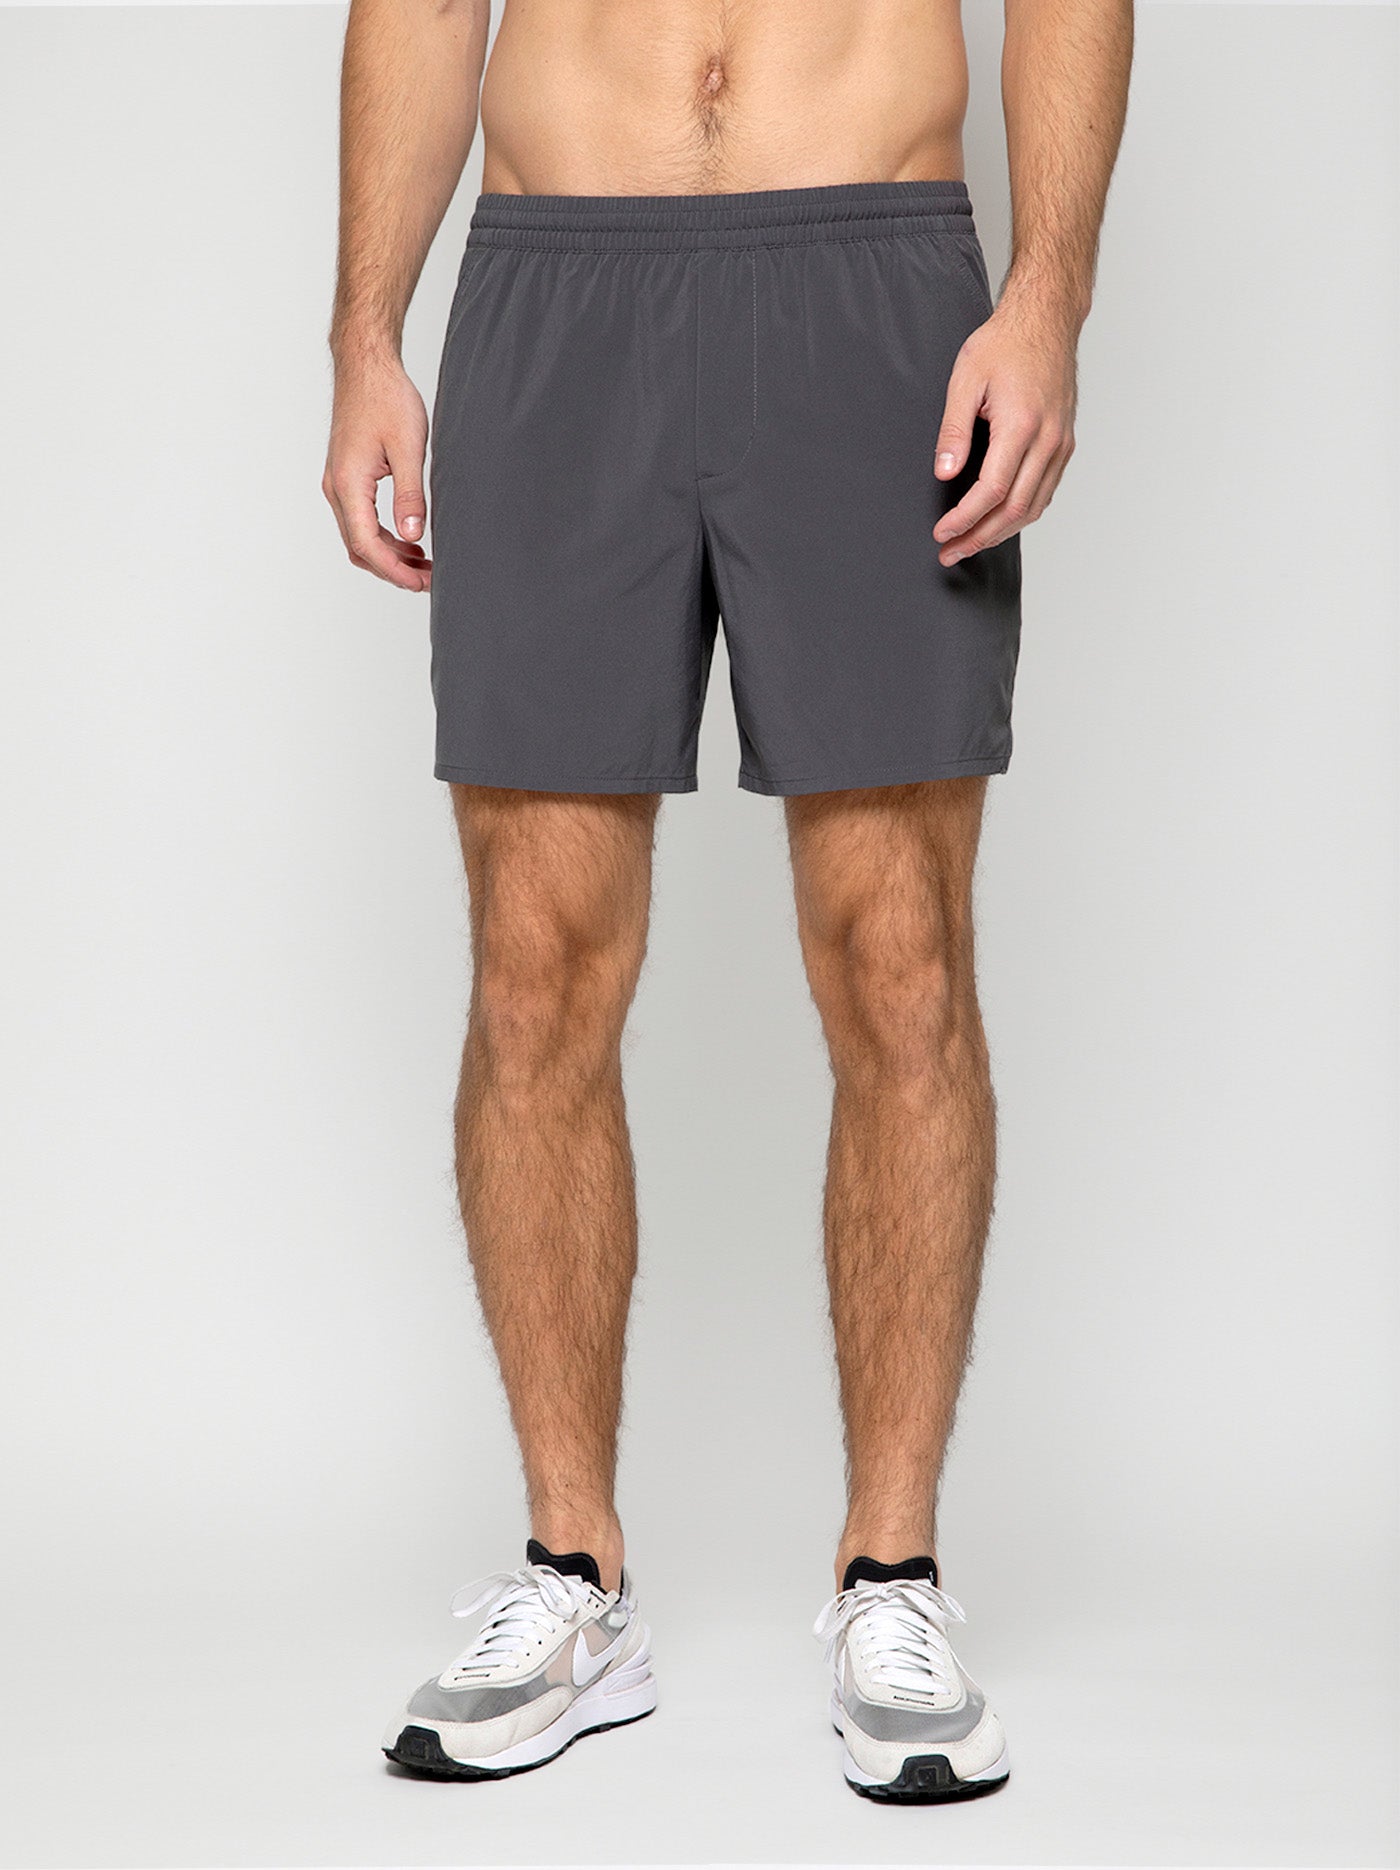 Endure Short: 6 inch Inseam Men\'s Shorts - Fourlaps